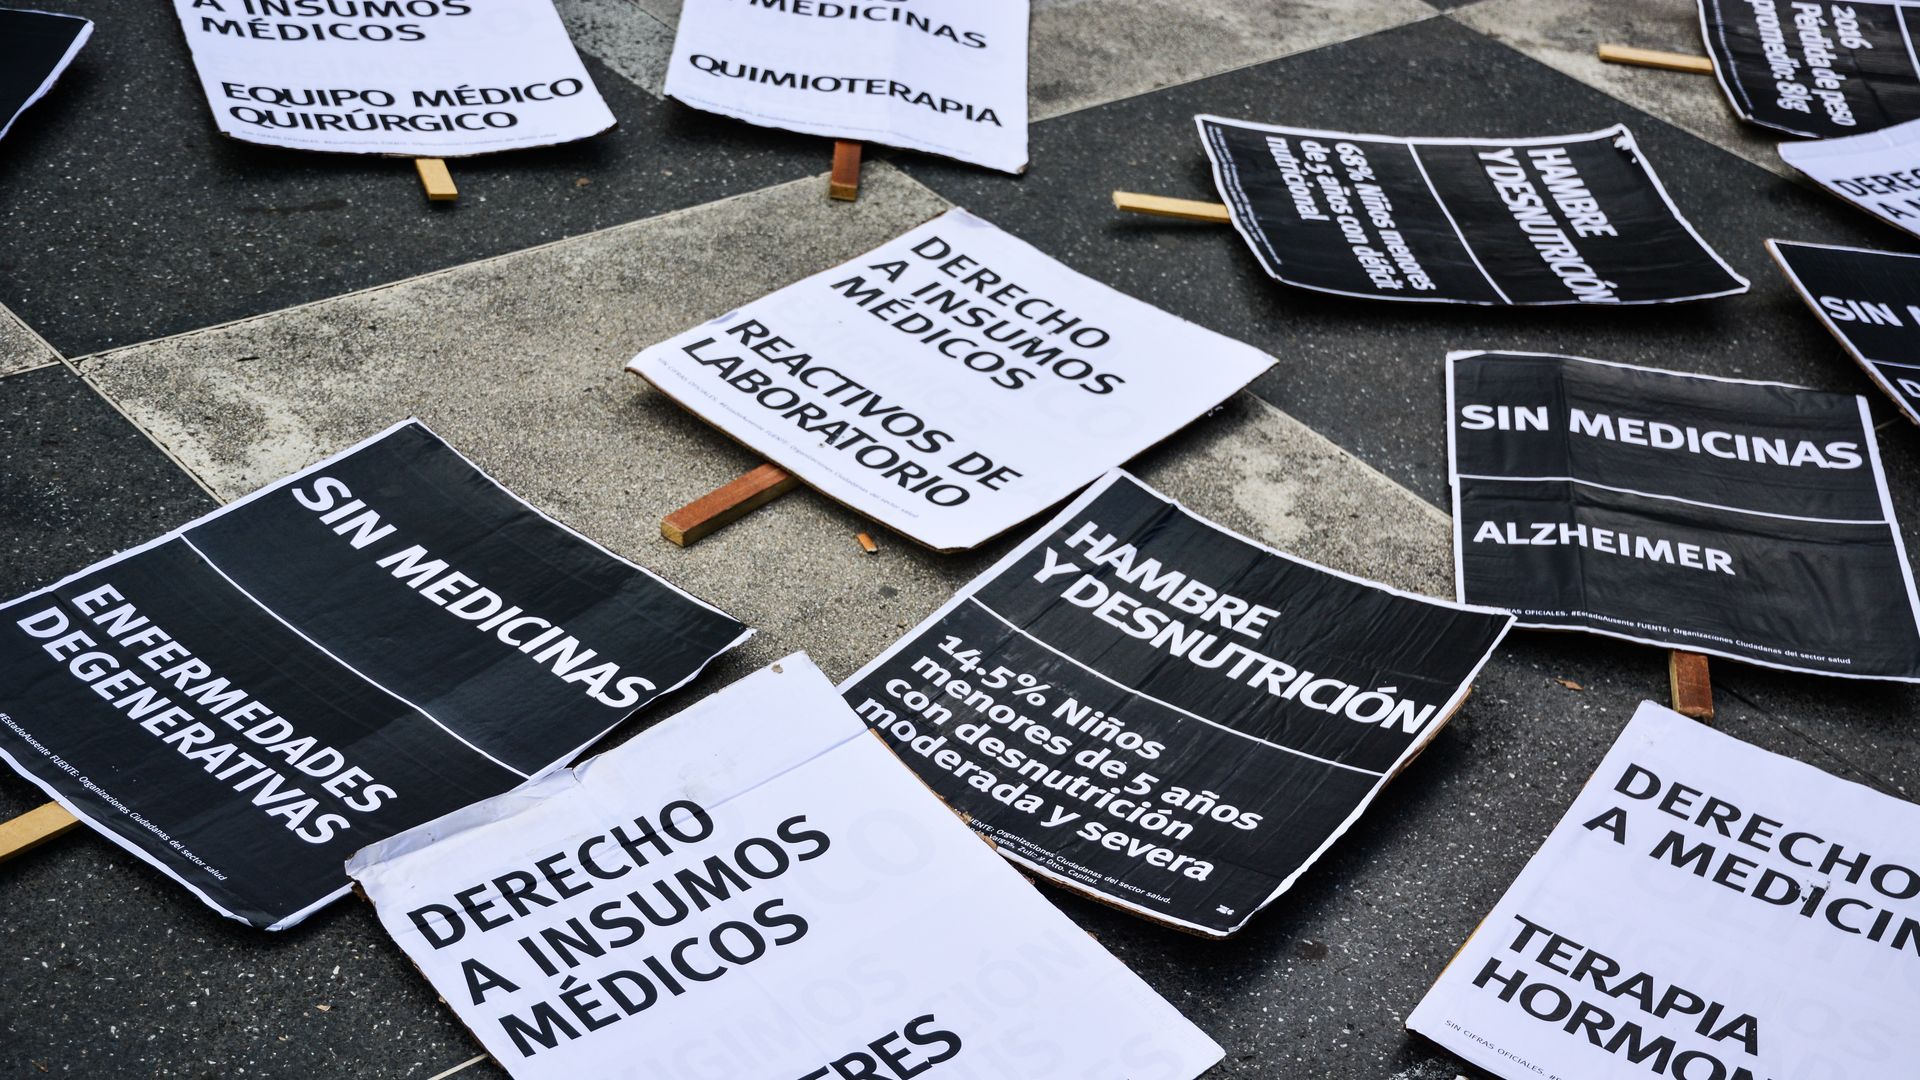 Protest signs in Caracas, Venezuela, where a drug shortage has exacerbated a malaria outbreak.